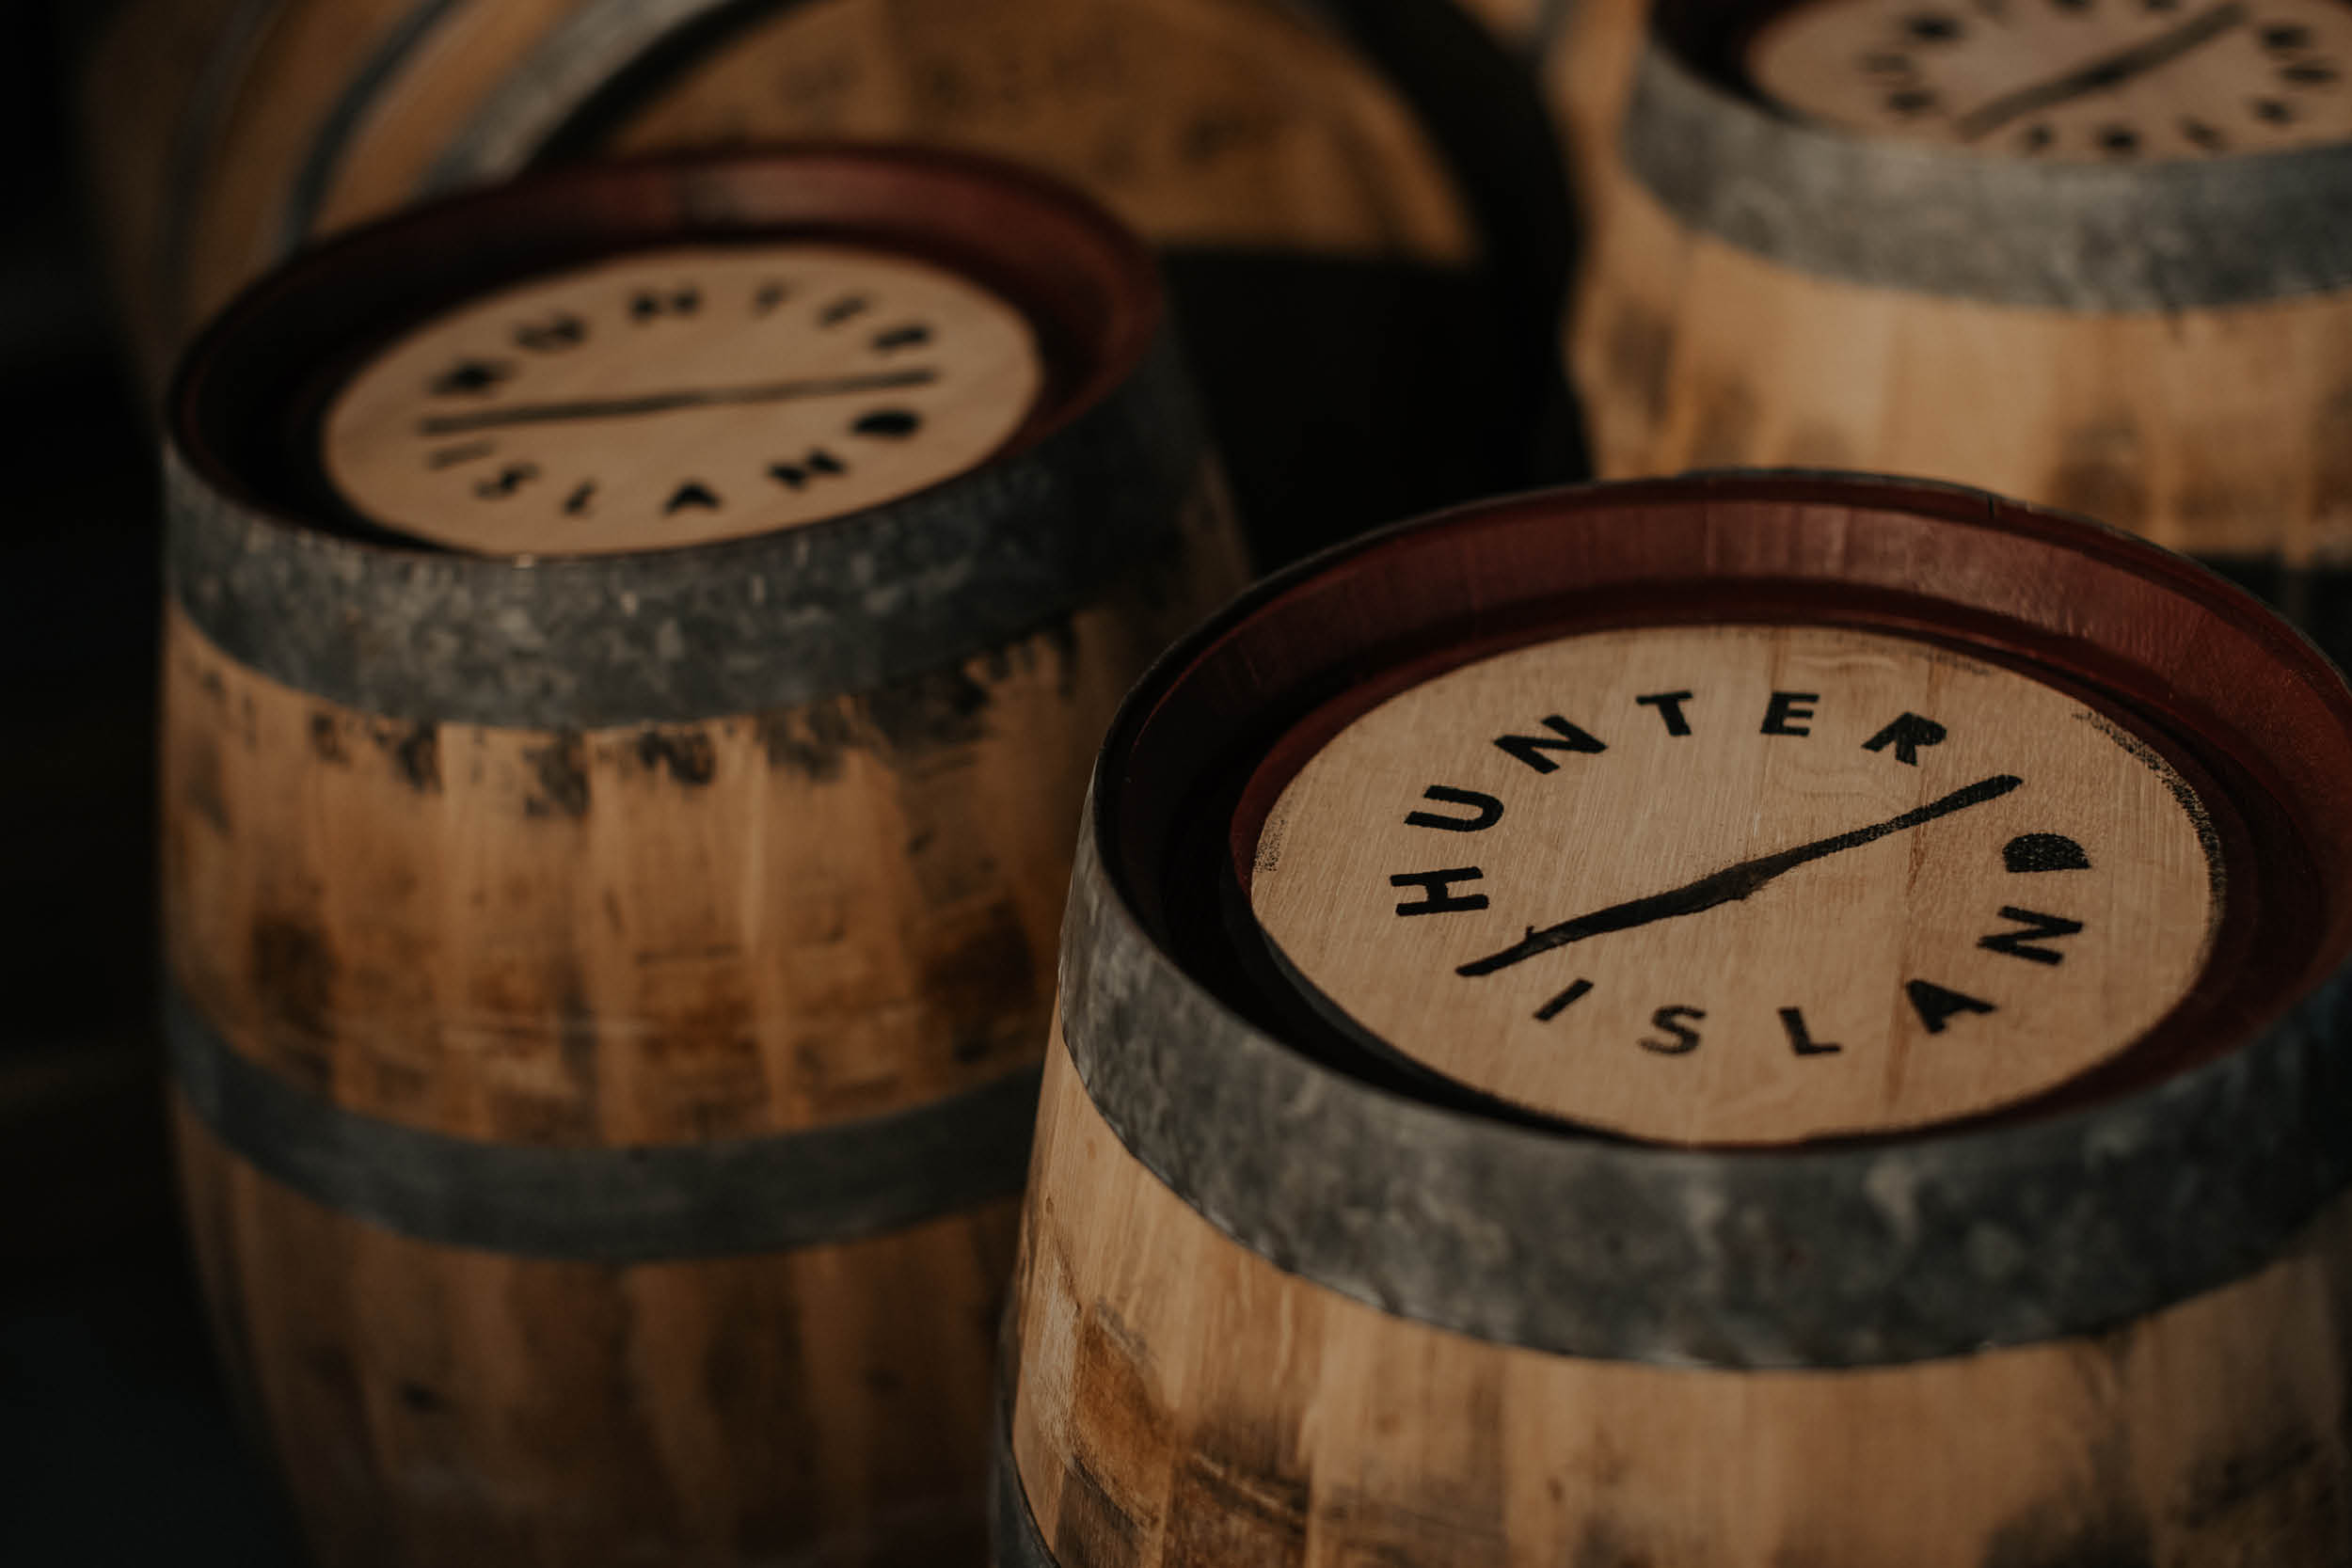 Hunter Island Whisky